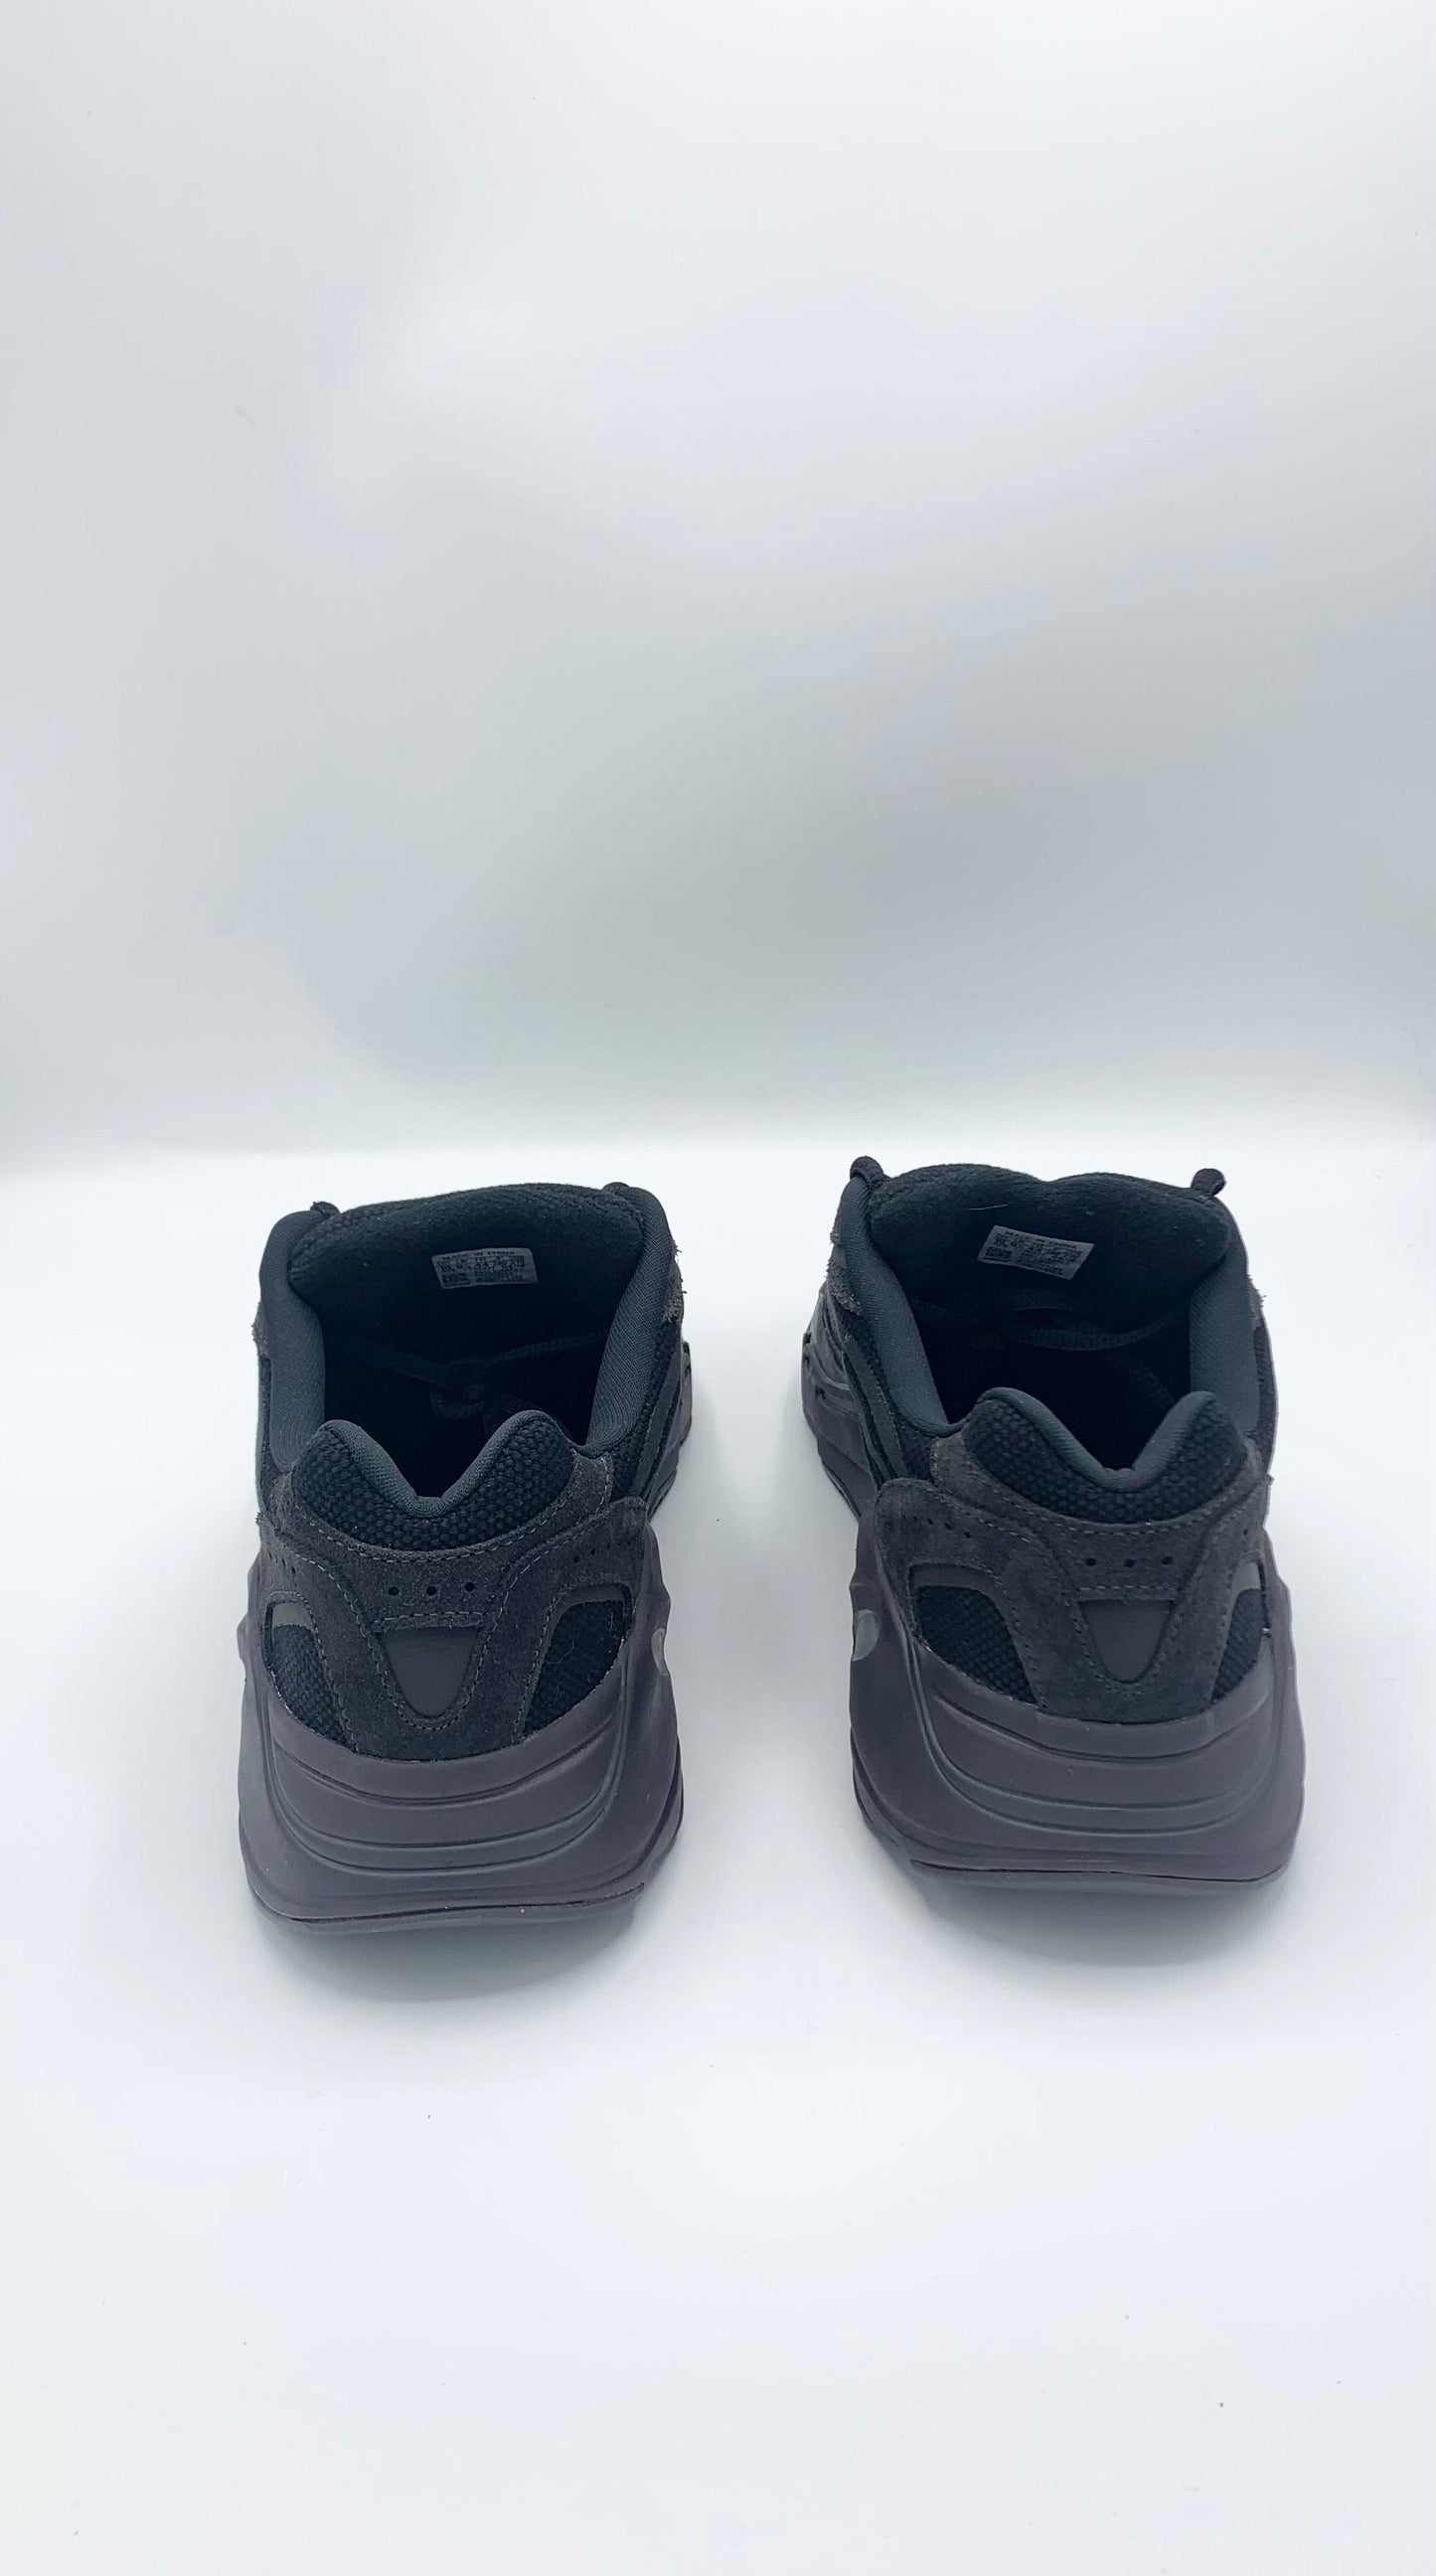 Adidas Yeezy Boost 700 V2 “Vanta” - KicksOfAmerica